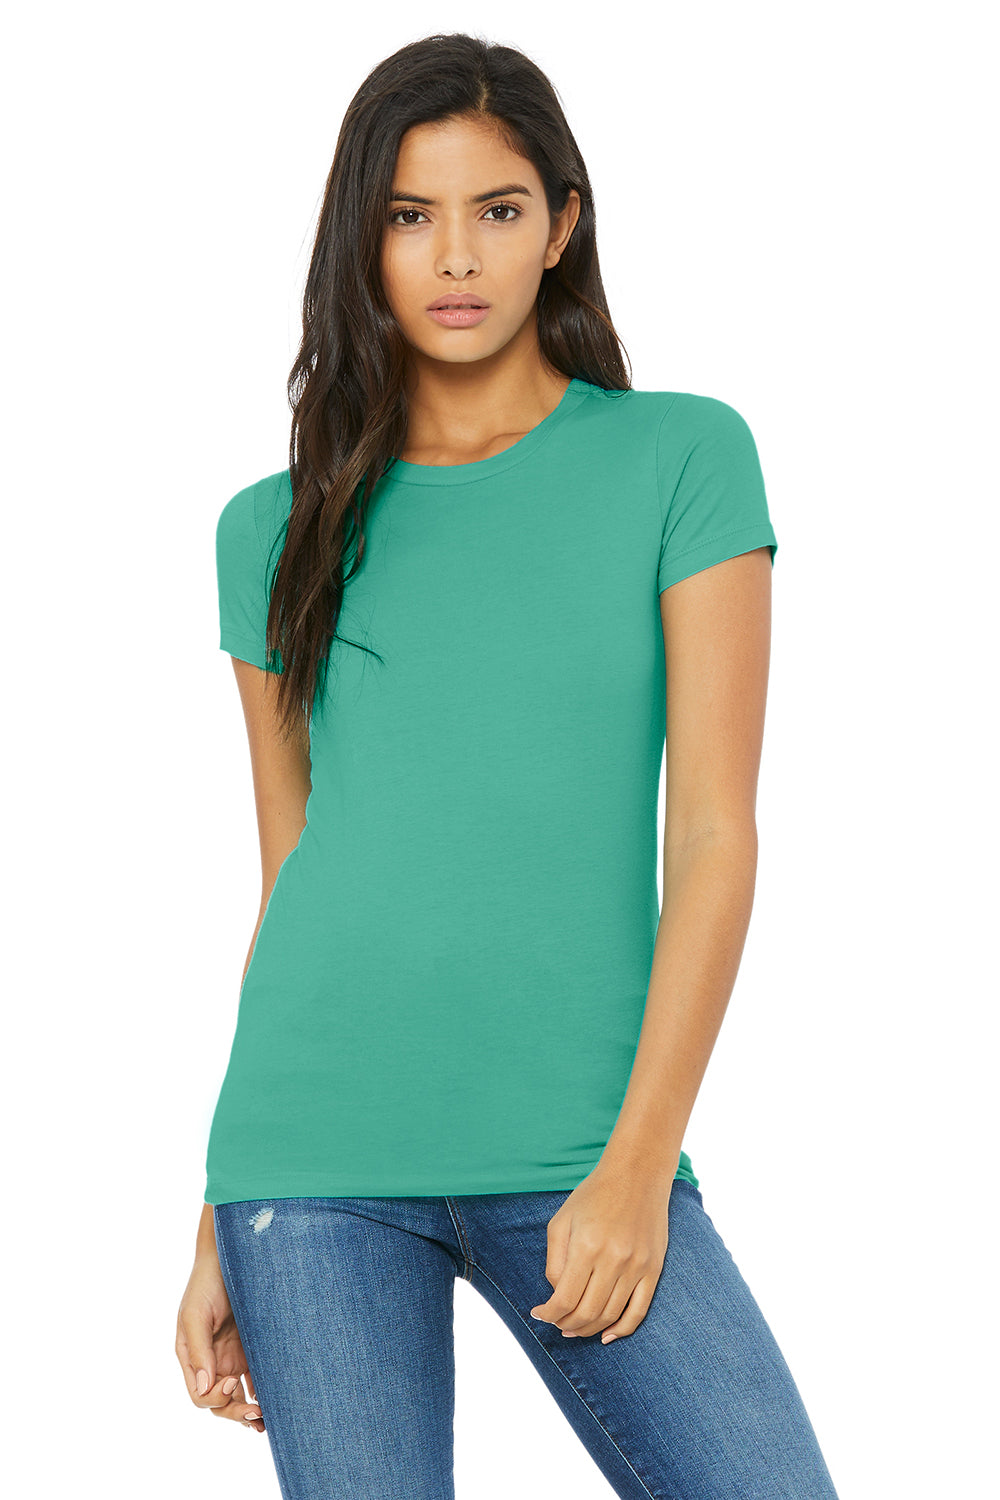 Bella + Canvas BC6004/6004 Womens The Favorite Short Sleeve Crewneck T-Shirt Teal Green Model Front